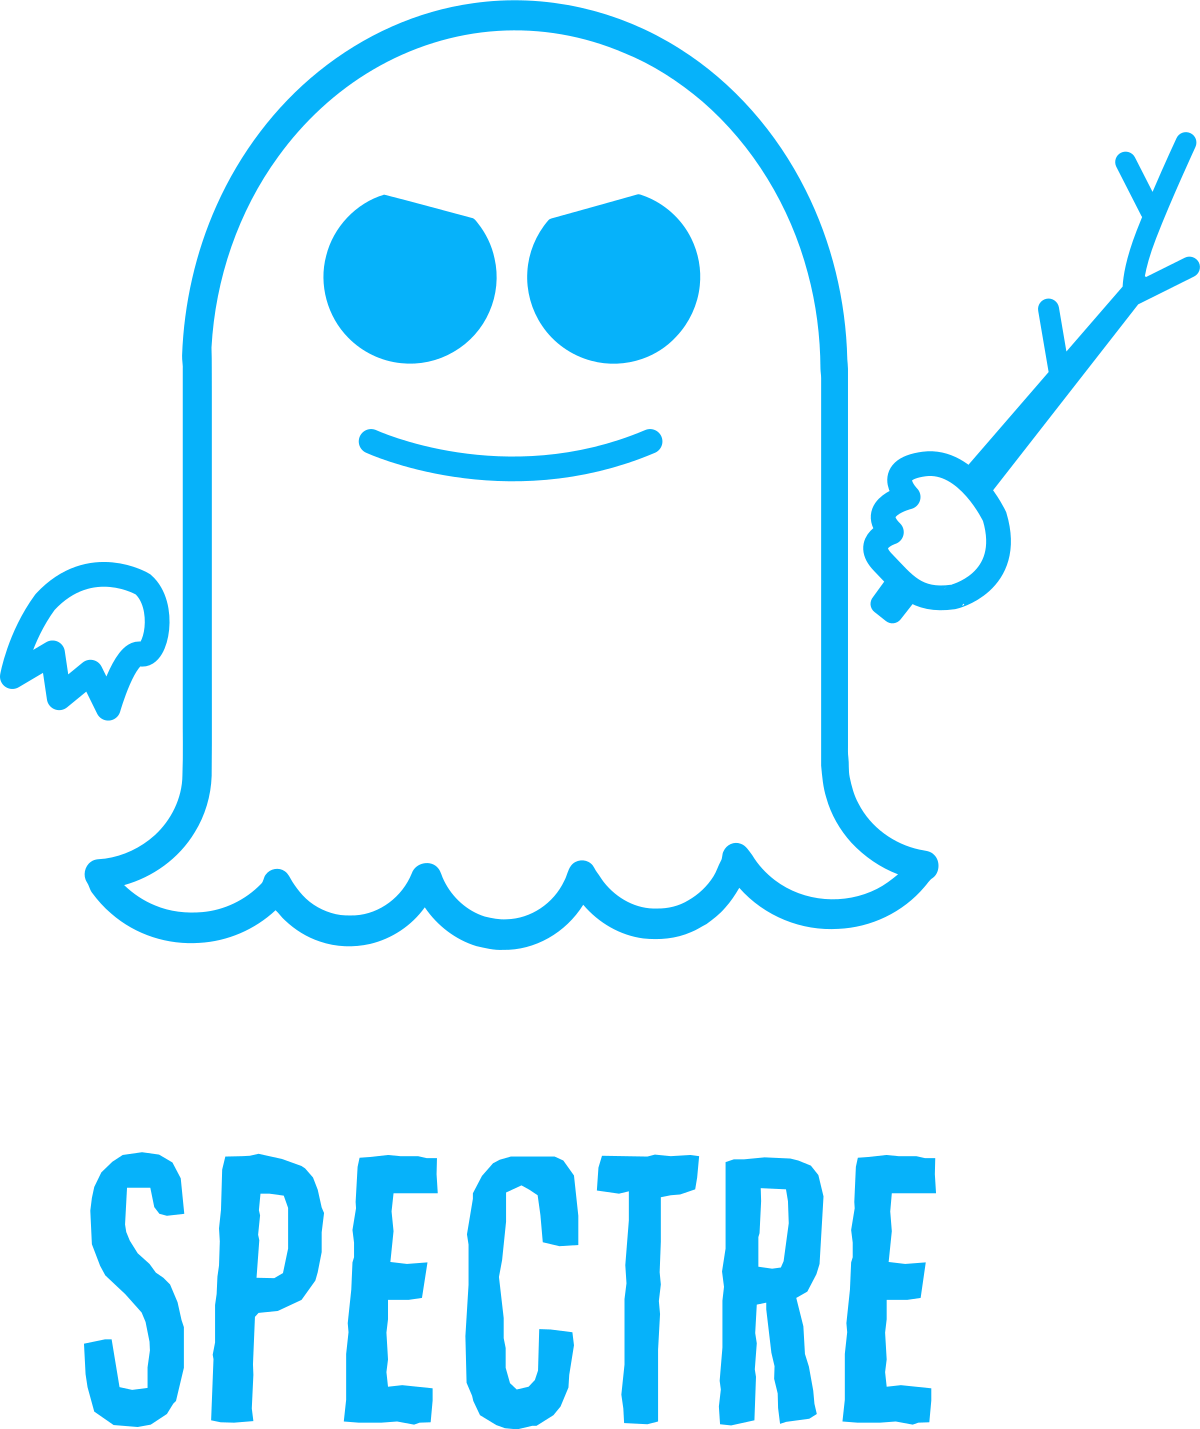 Spectre Logo - Spectre (security vulnerability)